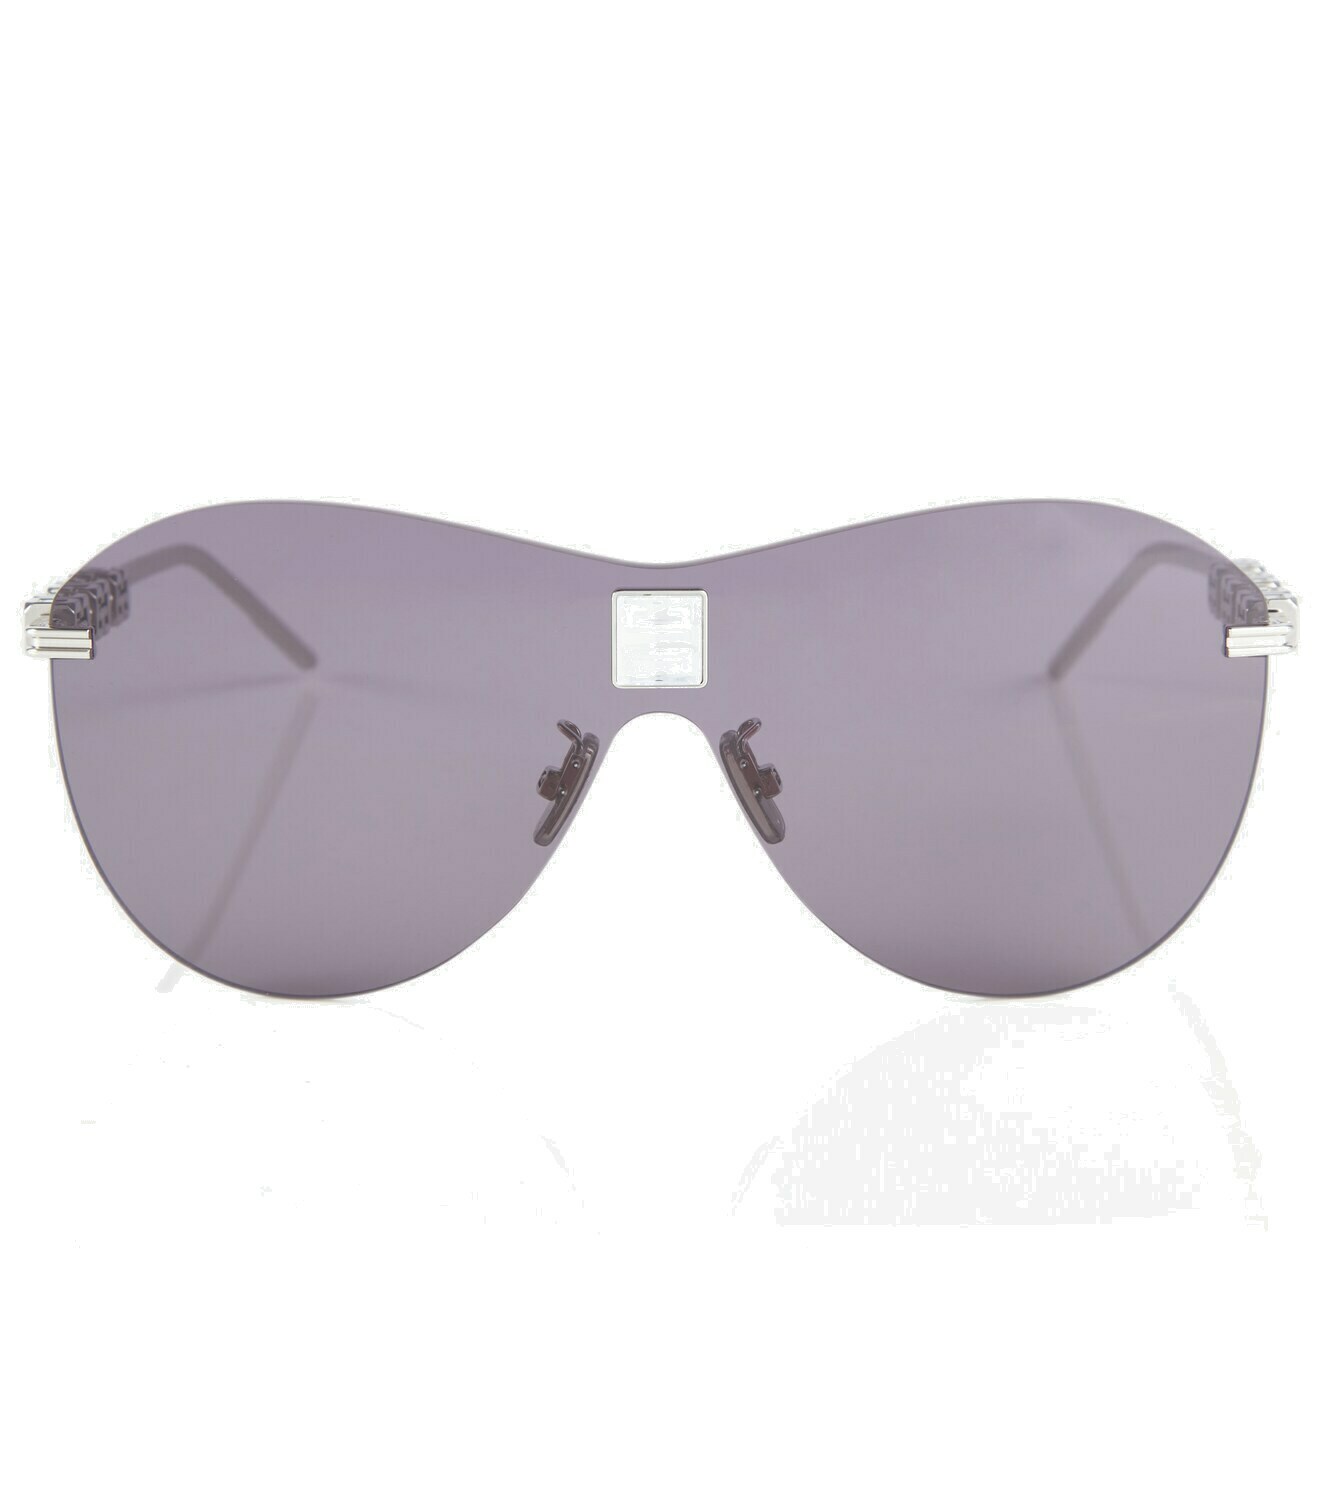 Givenchy - 4Gem mask sunglasses Givenchy